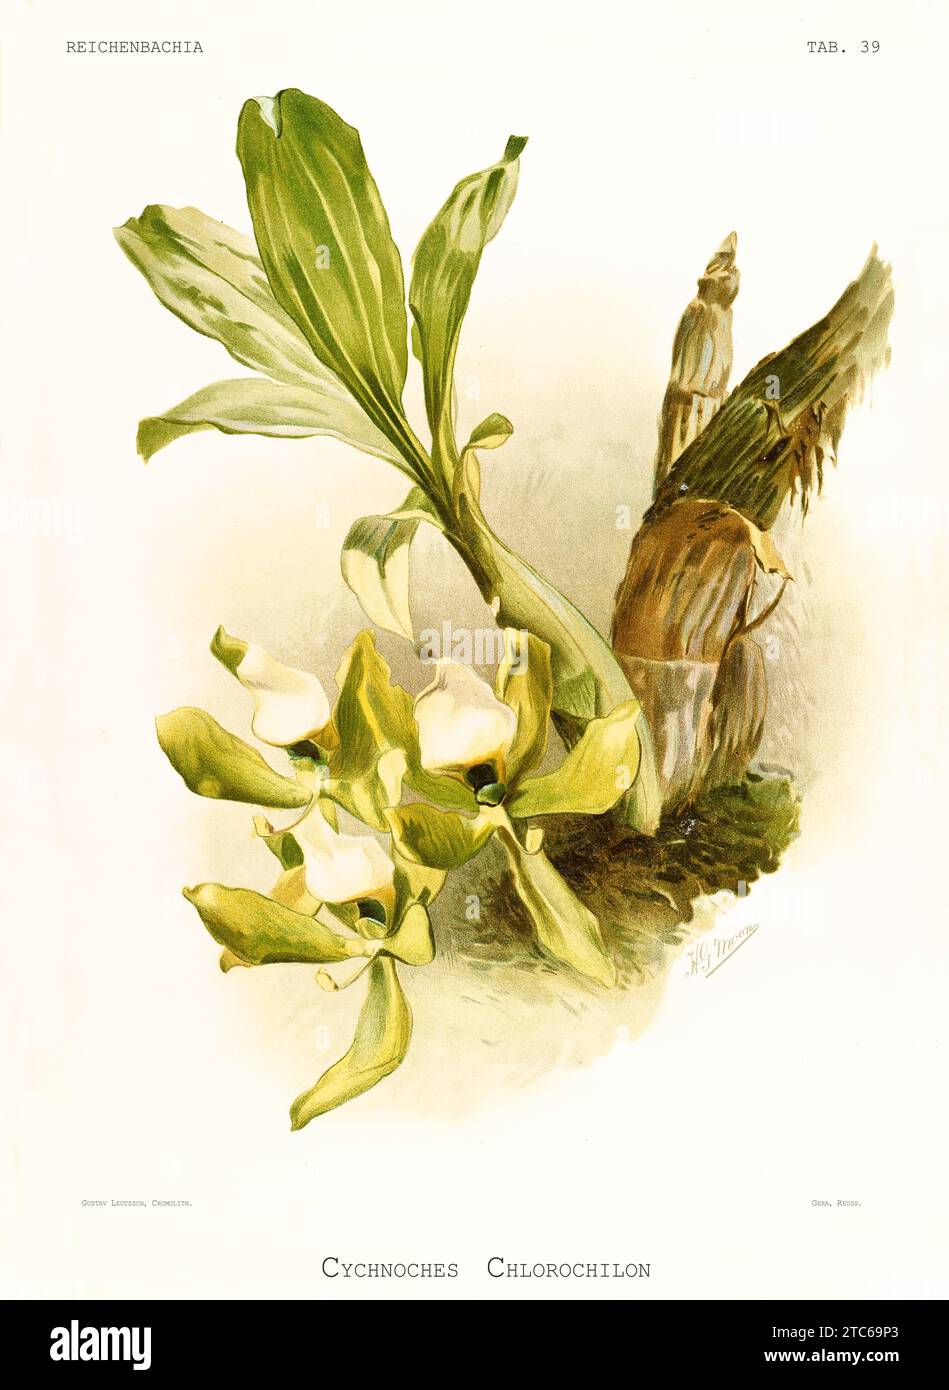 Old illustration of Green-Lipped Cycnoches (Cycnoches chlorochilon). Reichenbachia, by F. Sander. St. Albans, UK, 1888 - 1894 Stock Photo